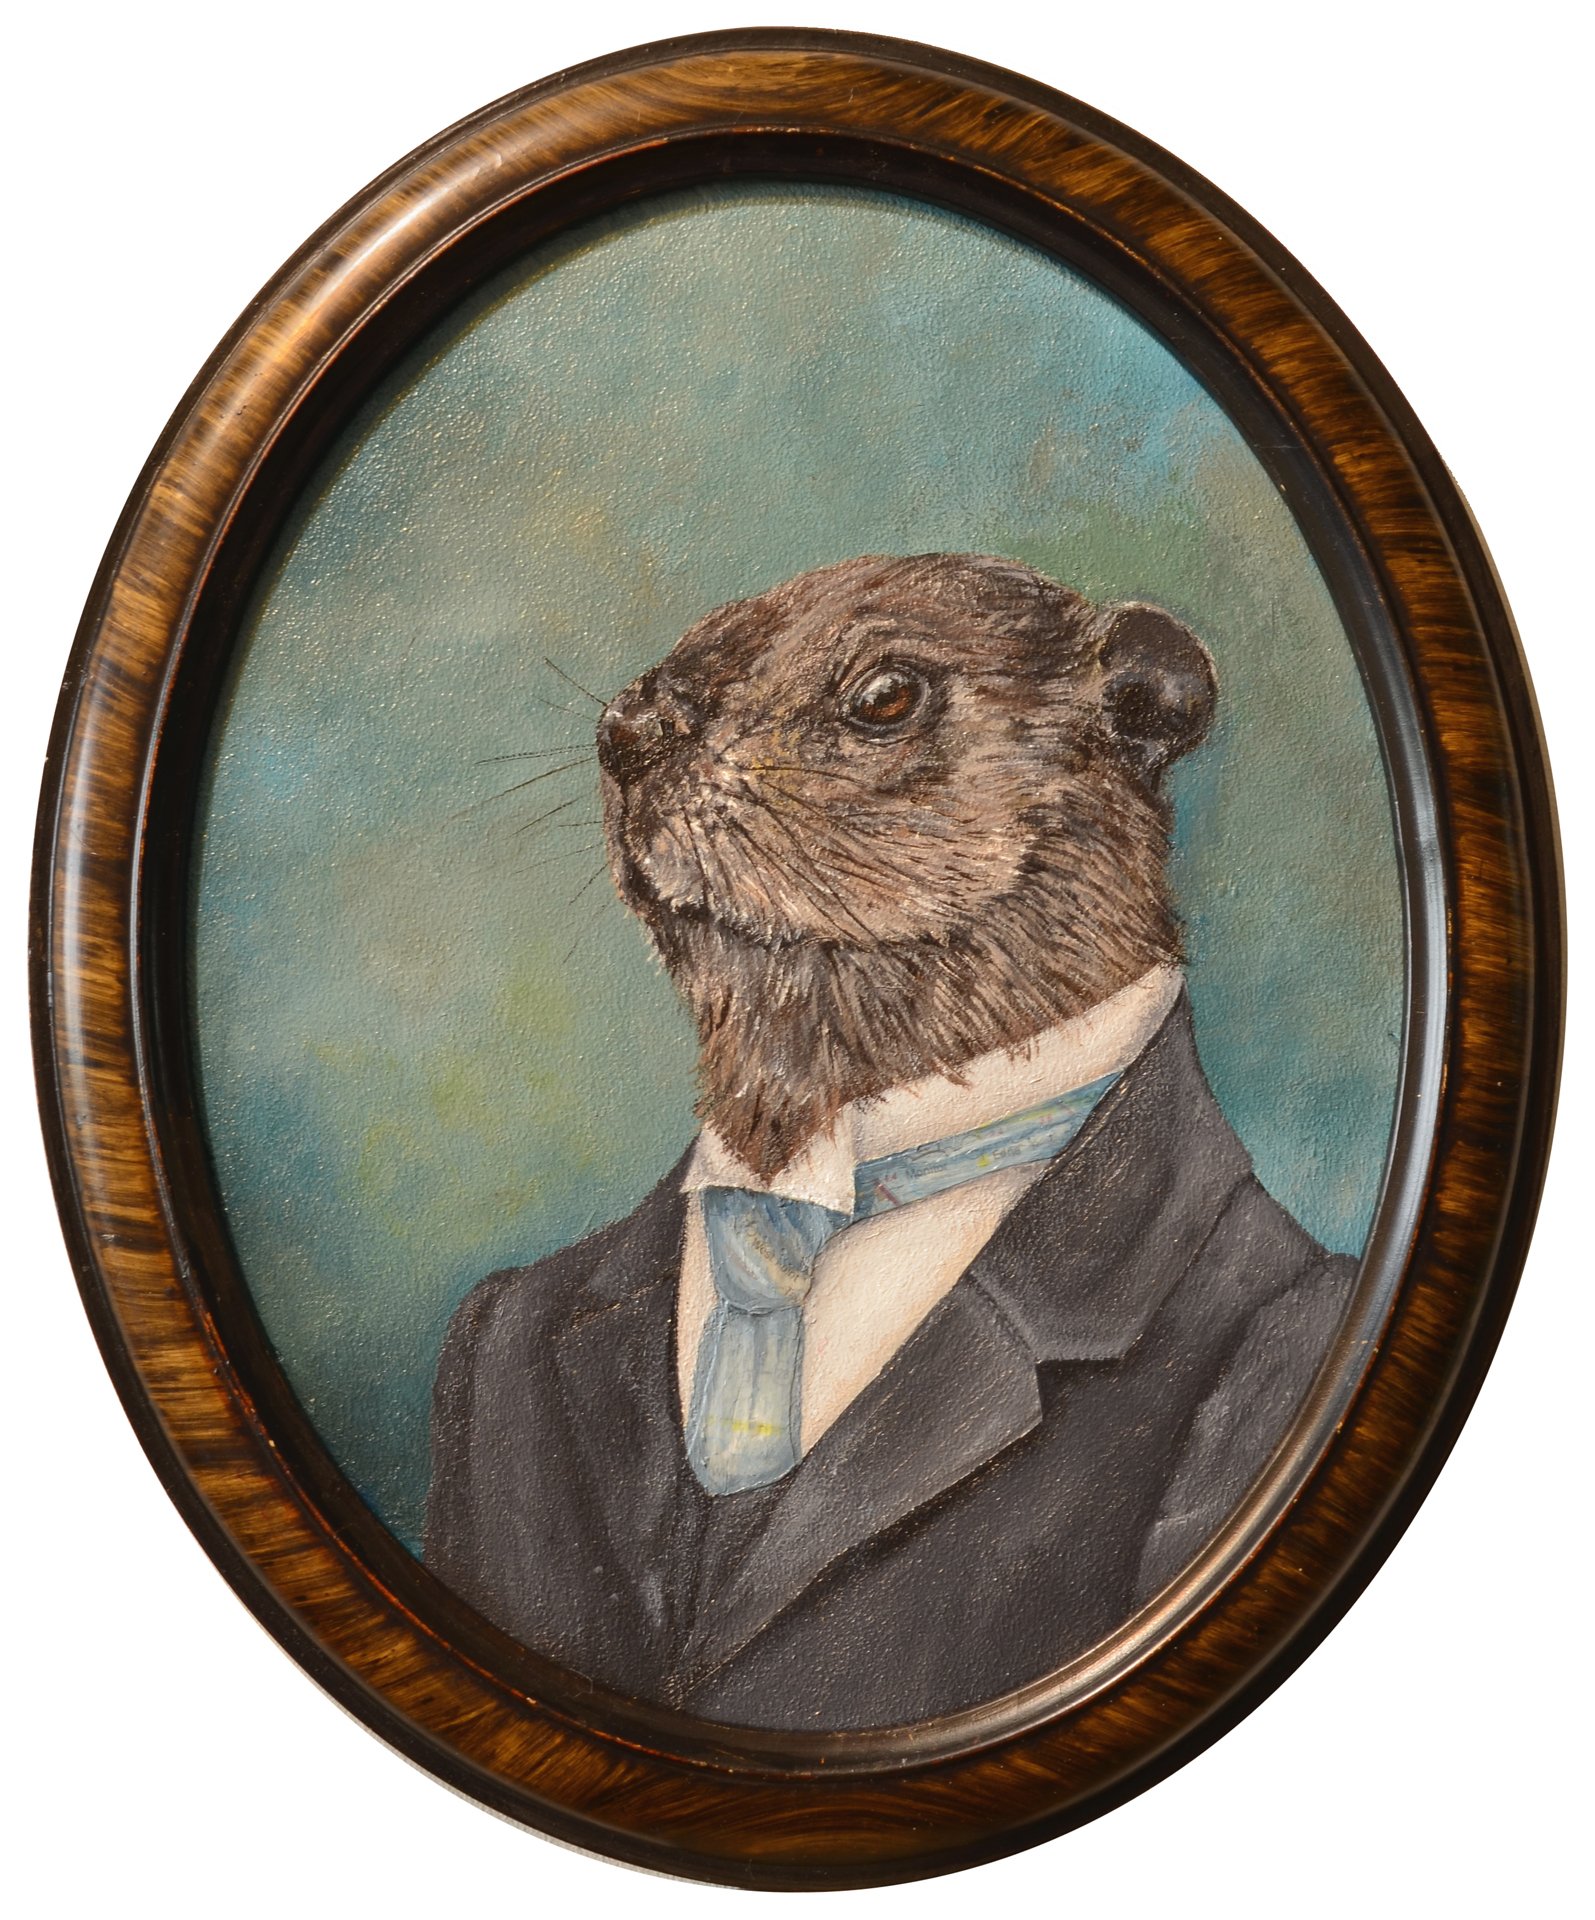 Mr. Groundhog